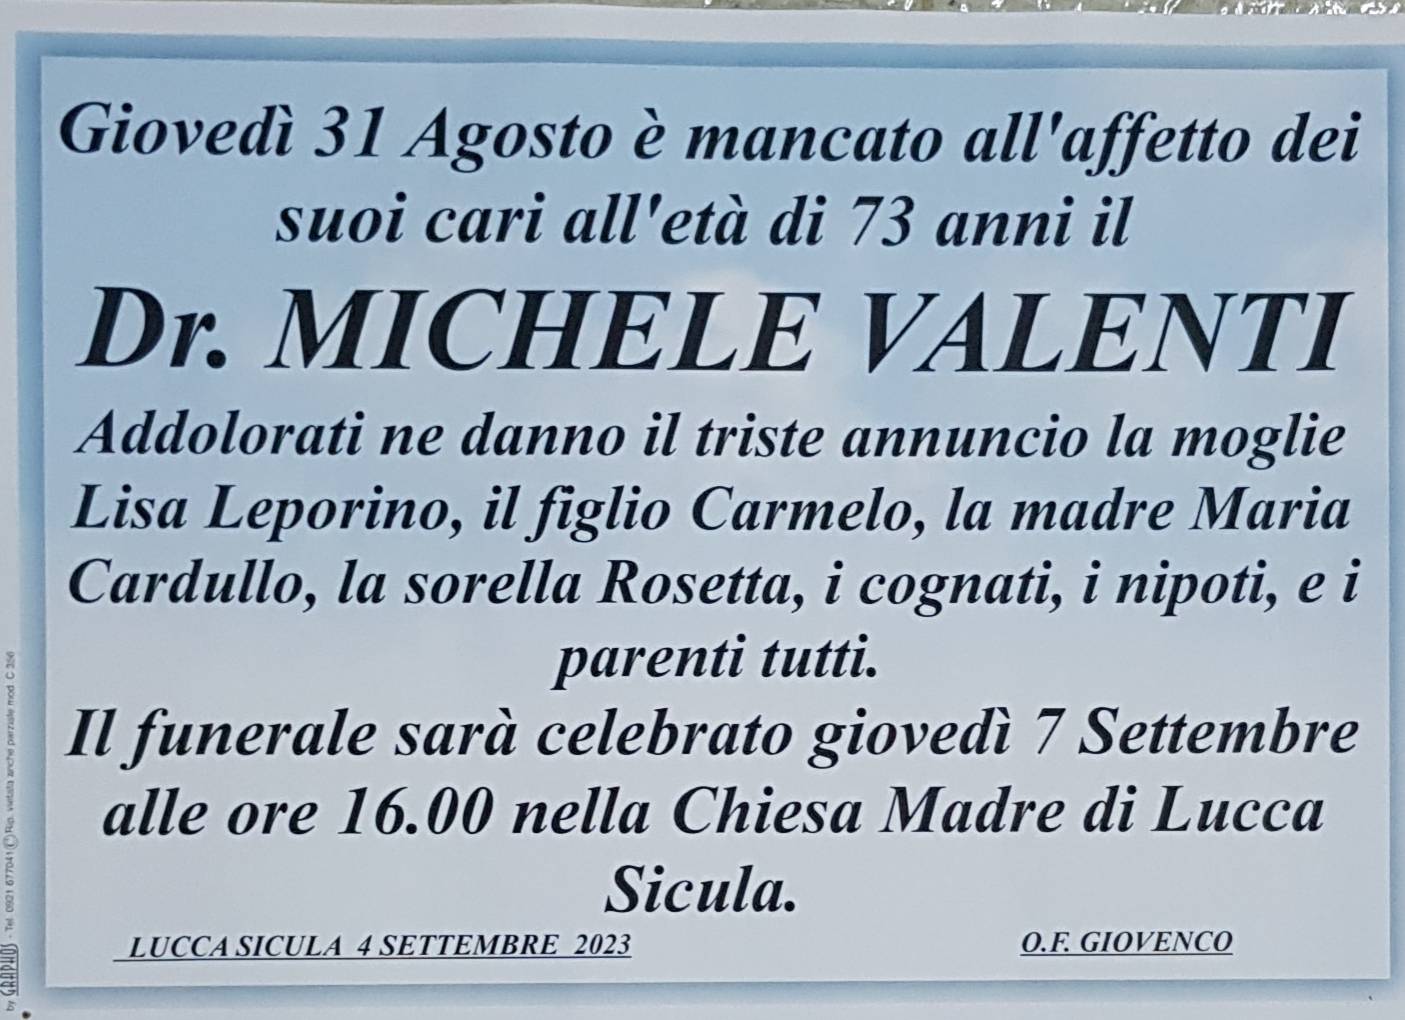 Michele Valenti